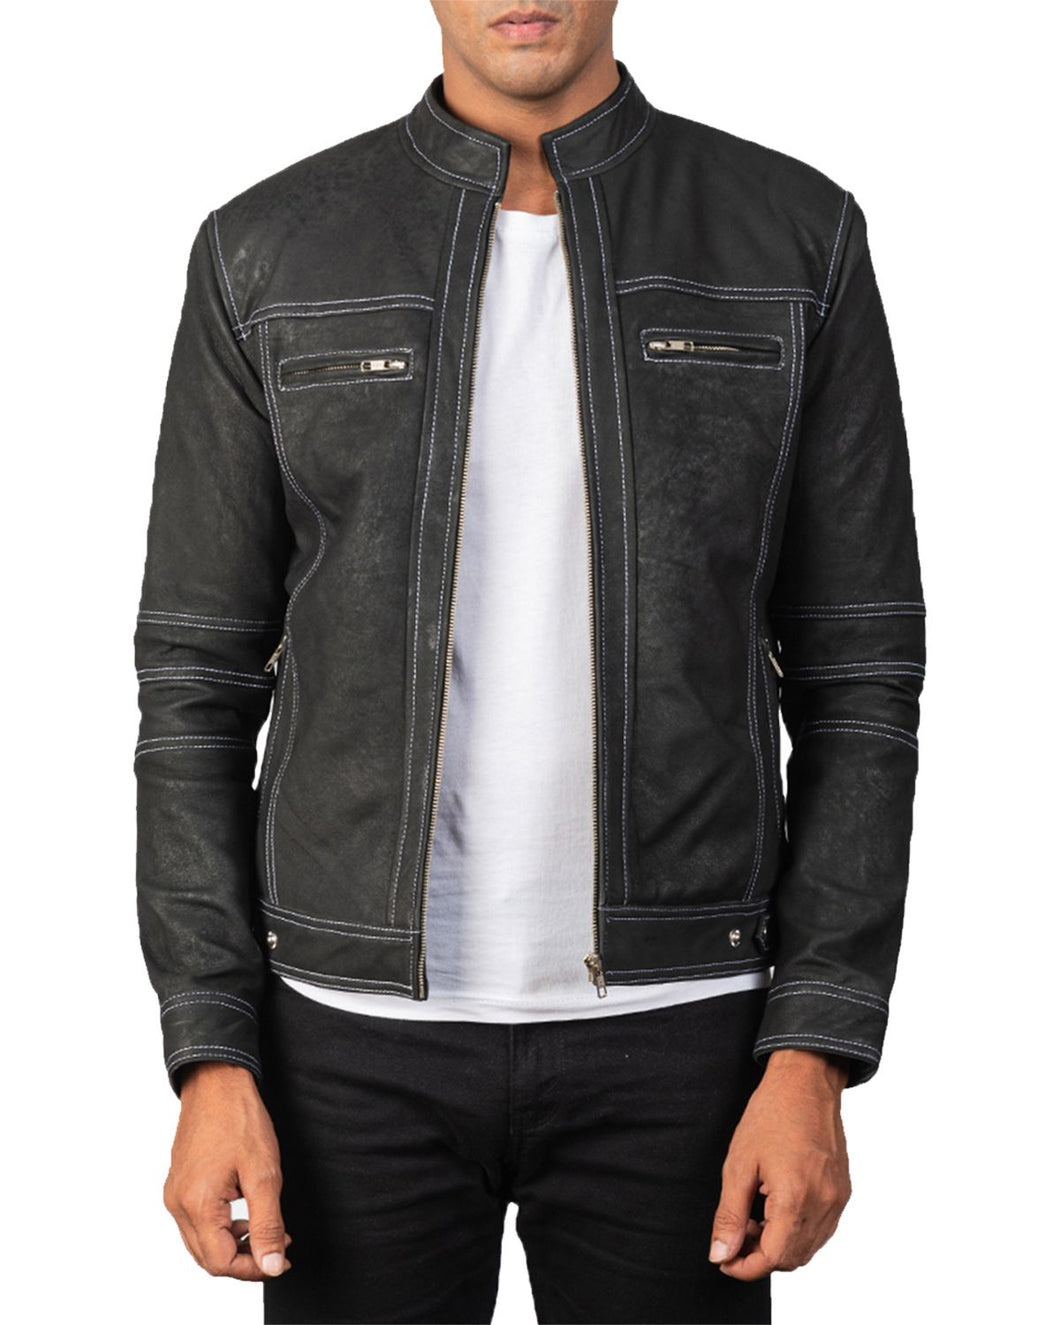 Men's Decent Black Leather Jacket